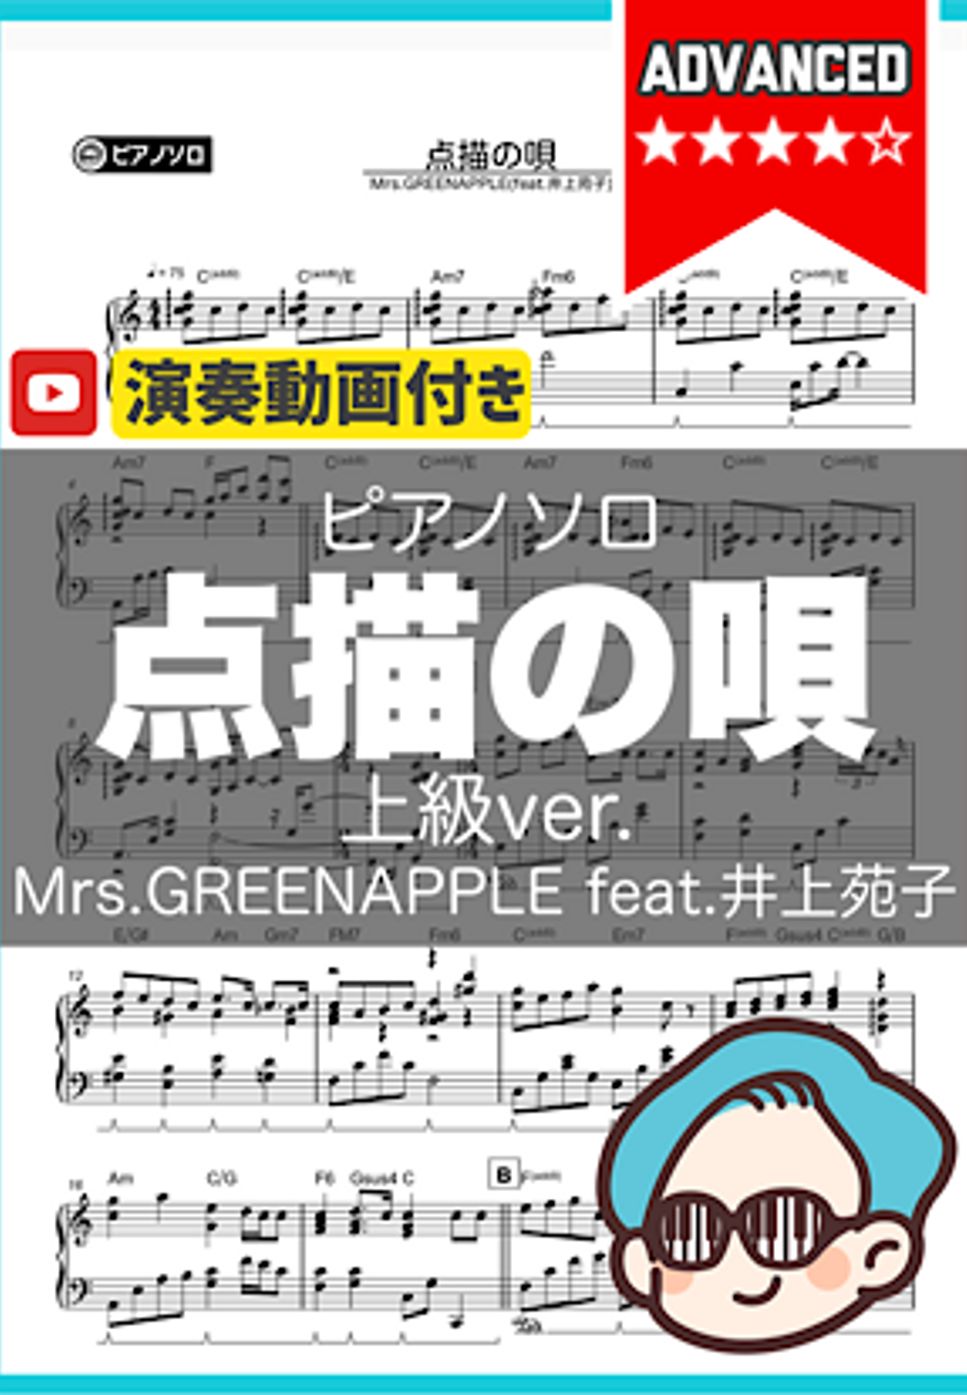 Mrs.GREENAPPLE(feat.井上苑子) - 点描の唄(上級ver.) by シータピアノ